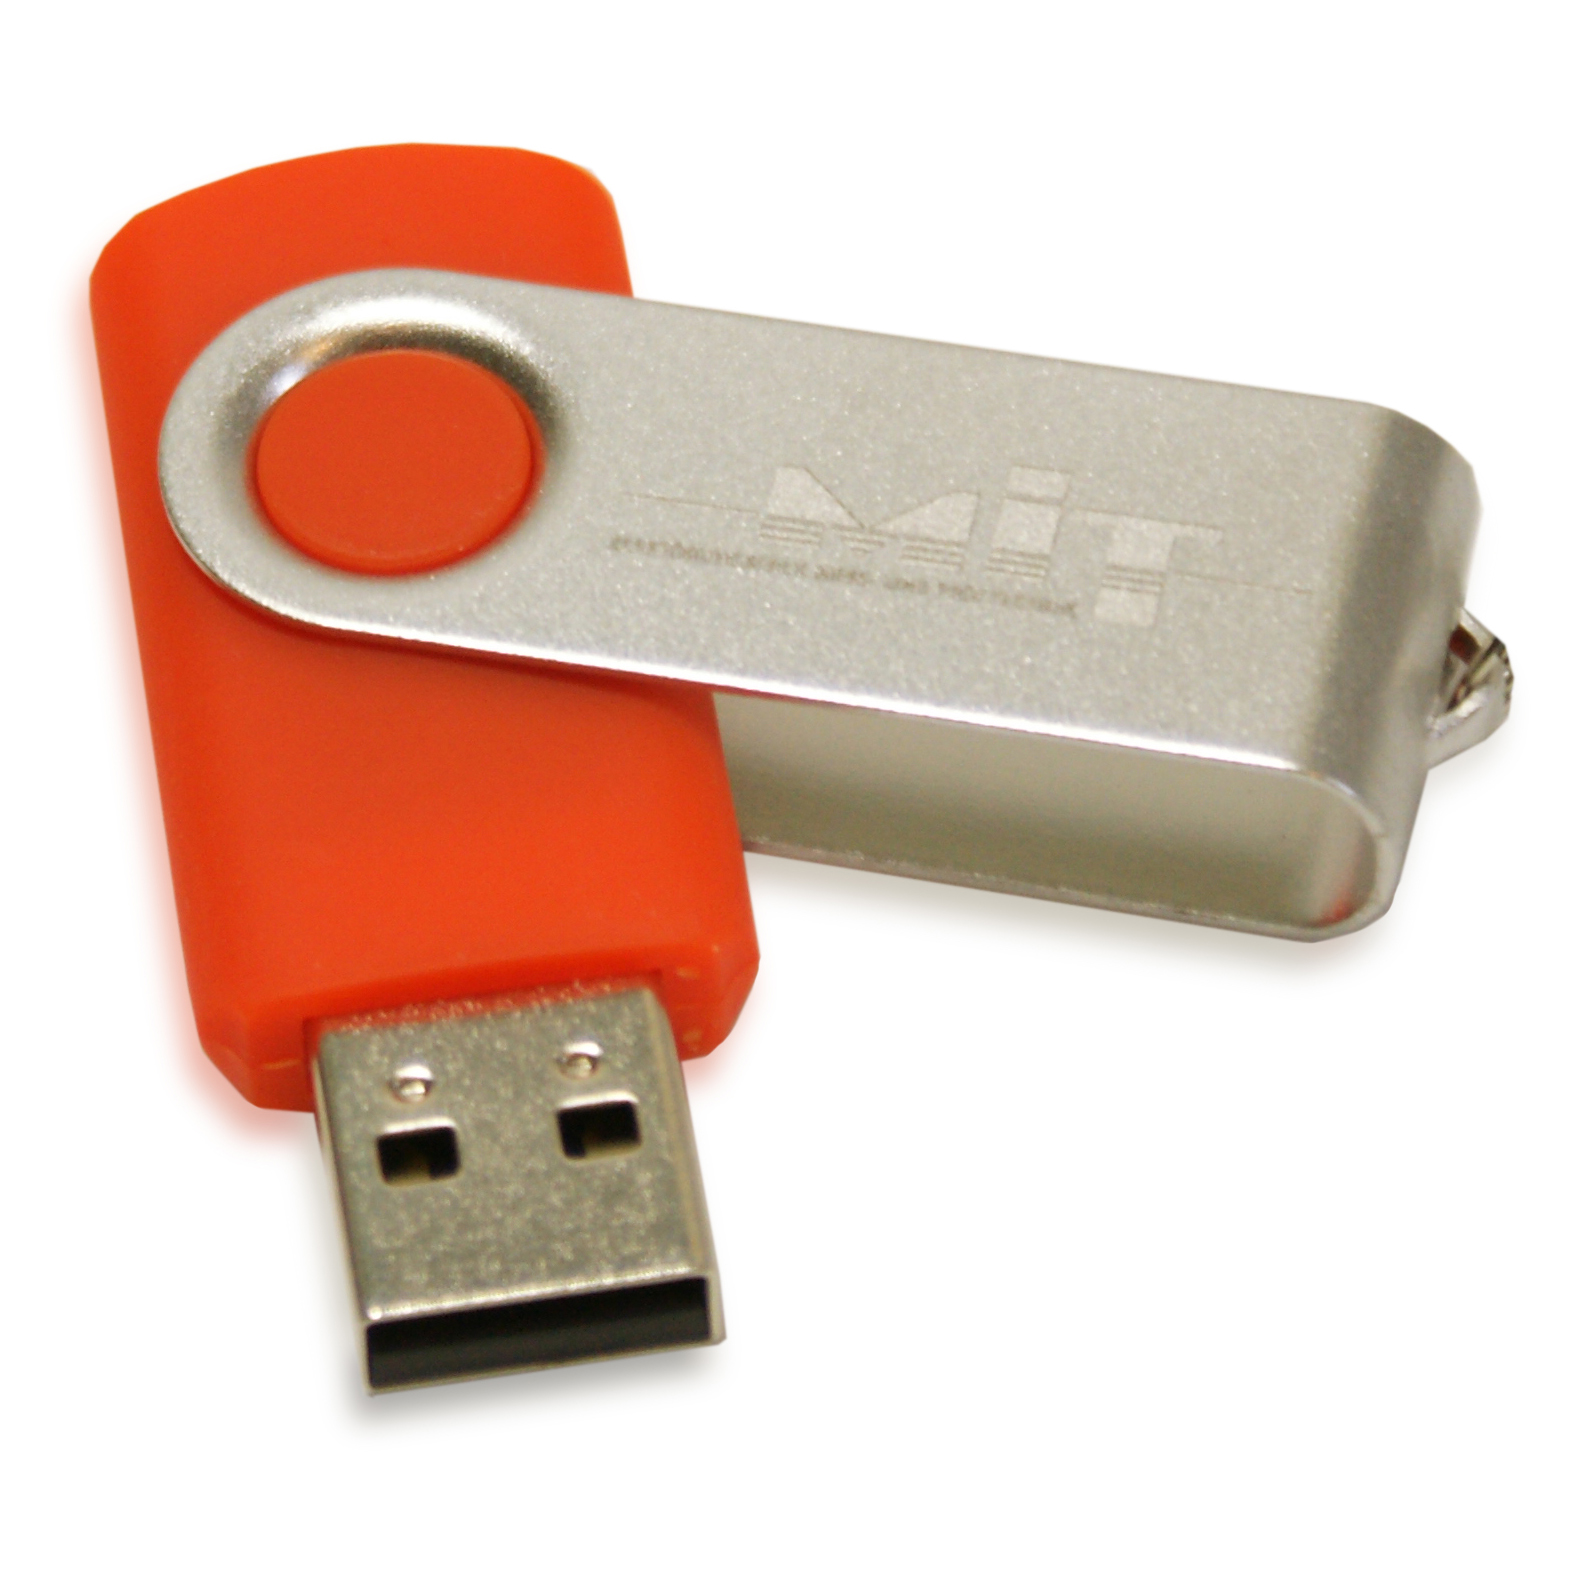 USB-stick voor MIT-SCAN